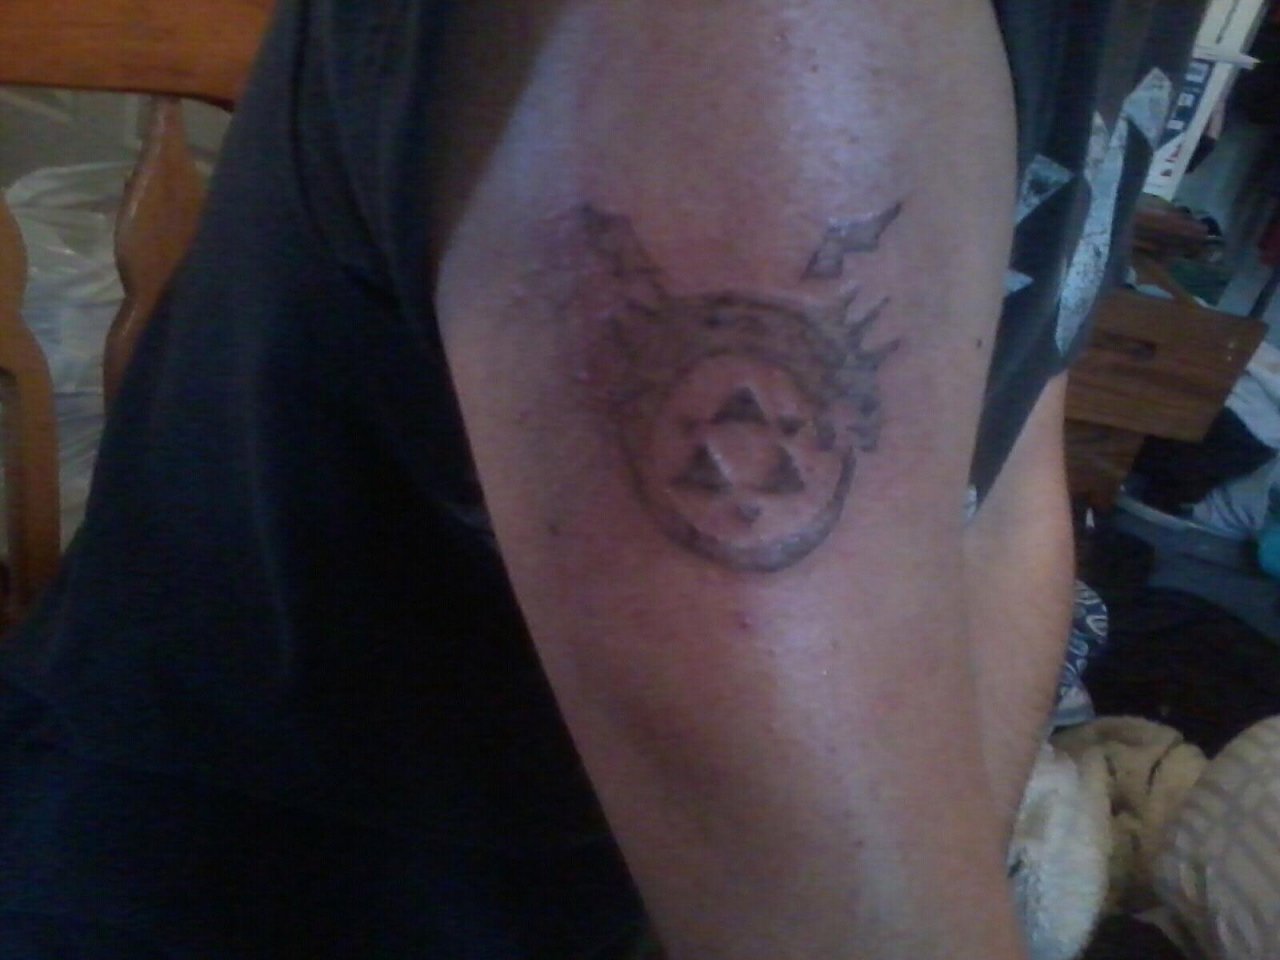 Ouroboros tattoo by LaEmbajadaTattoo on DeviantArt